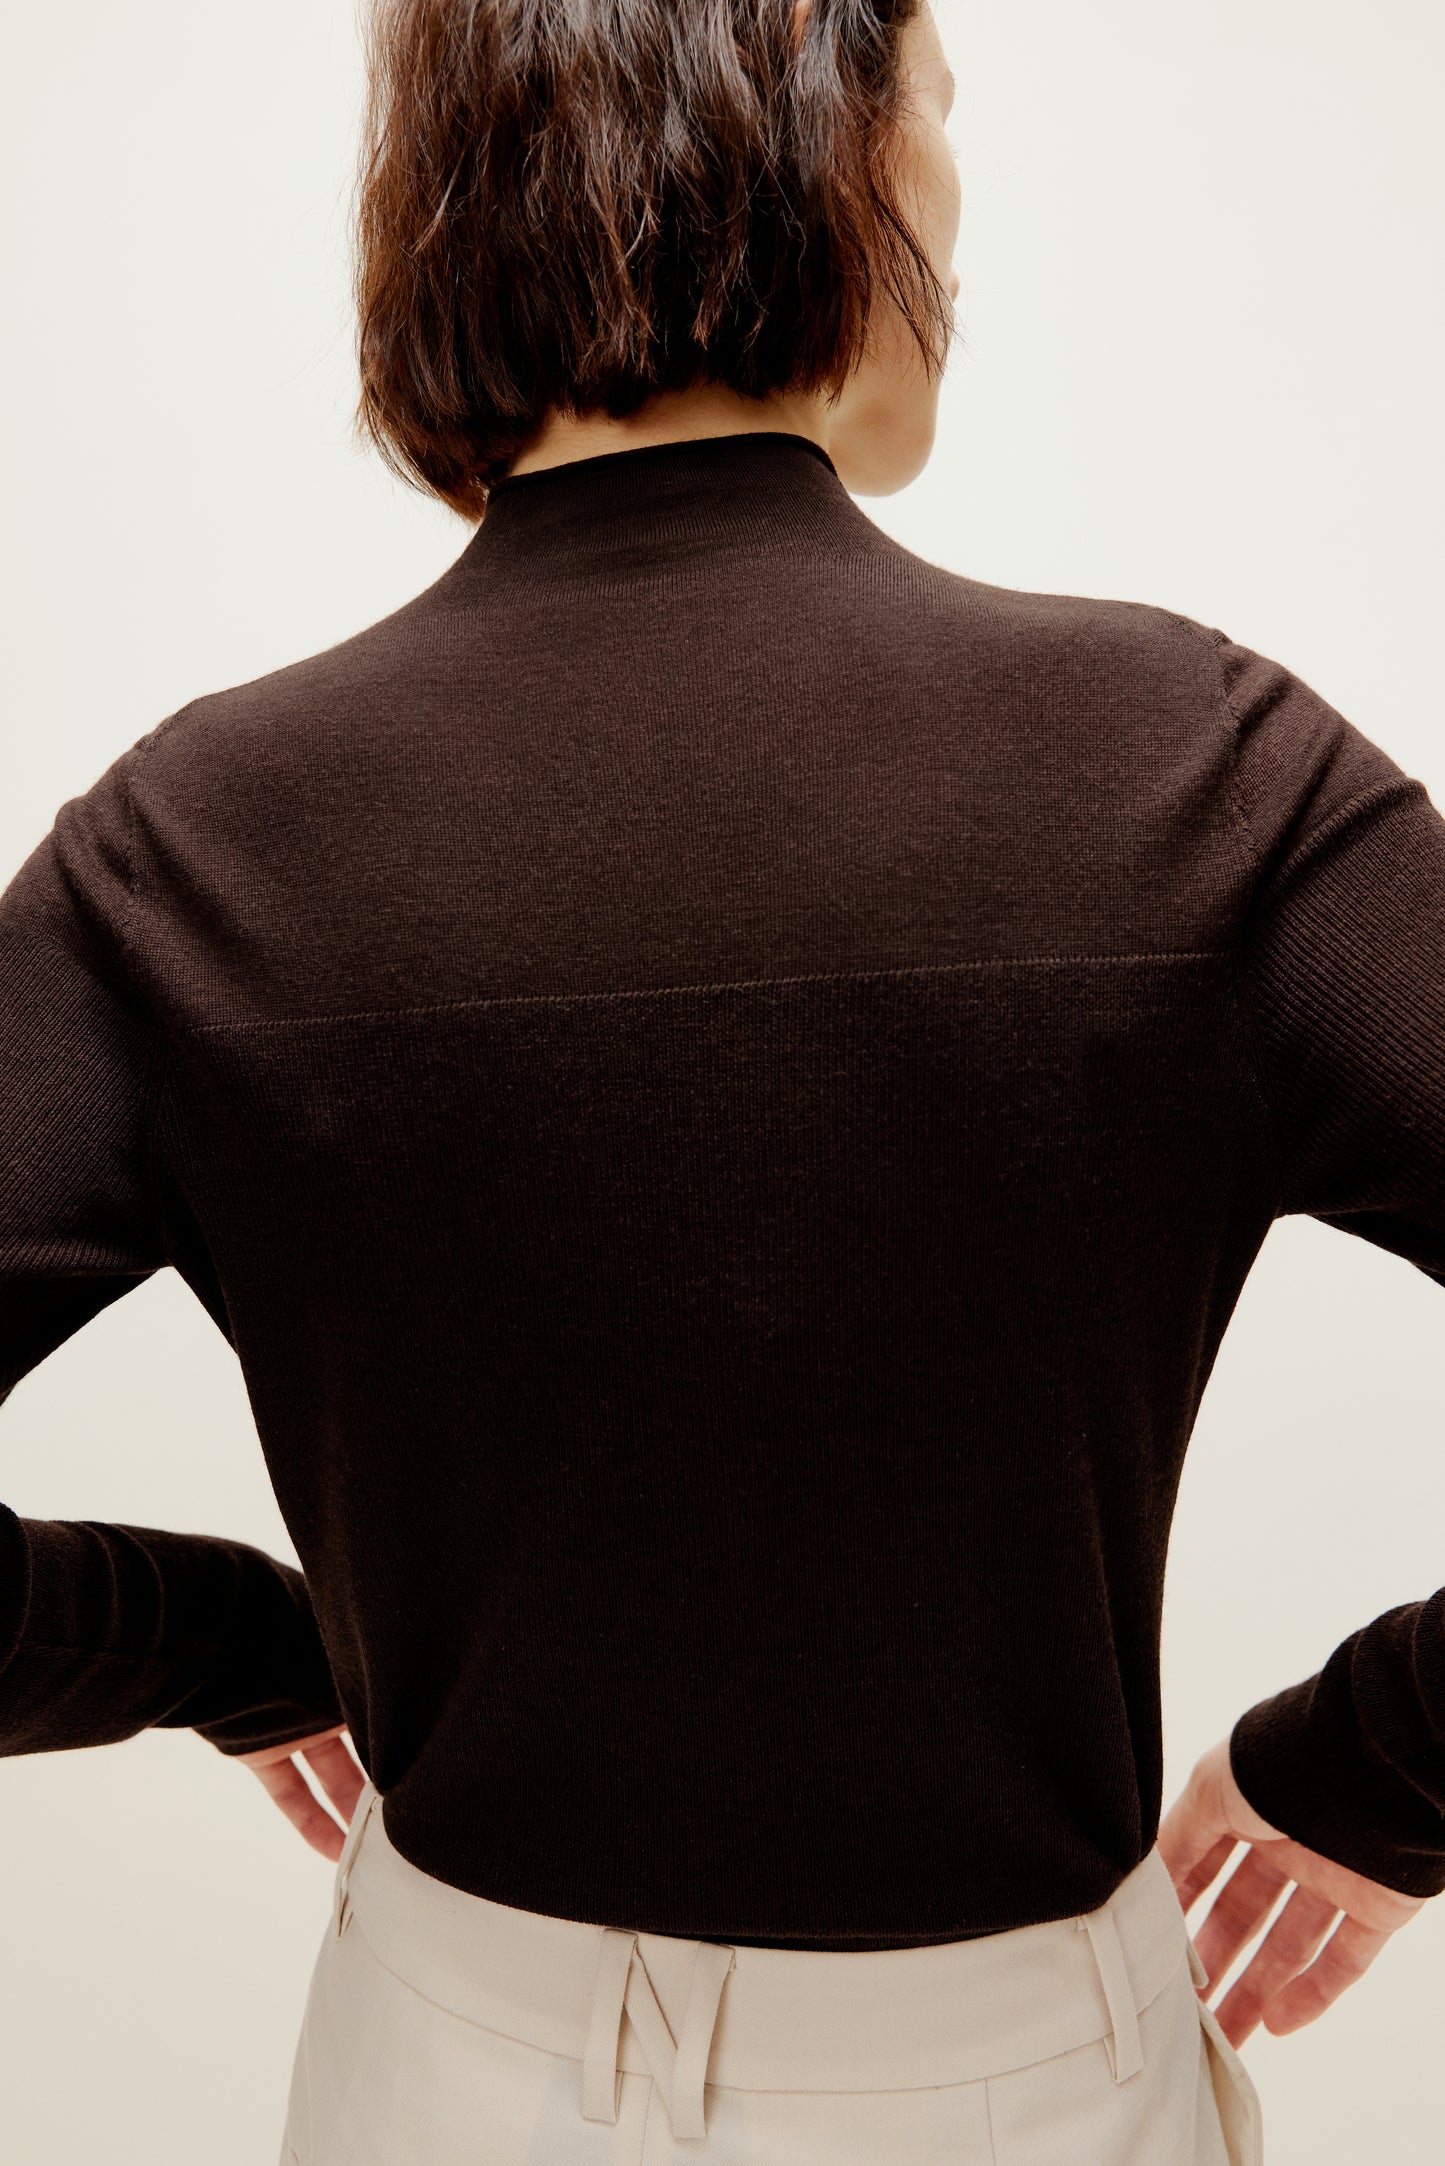 A woman wears a brown silky wool mock neck sweater from back